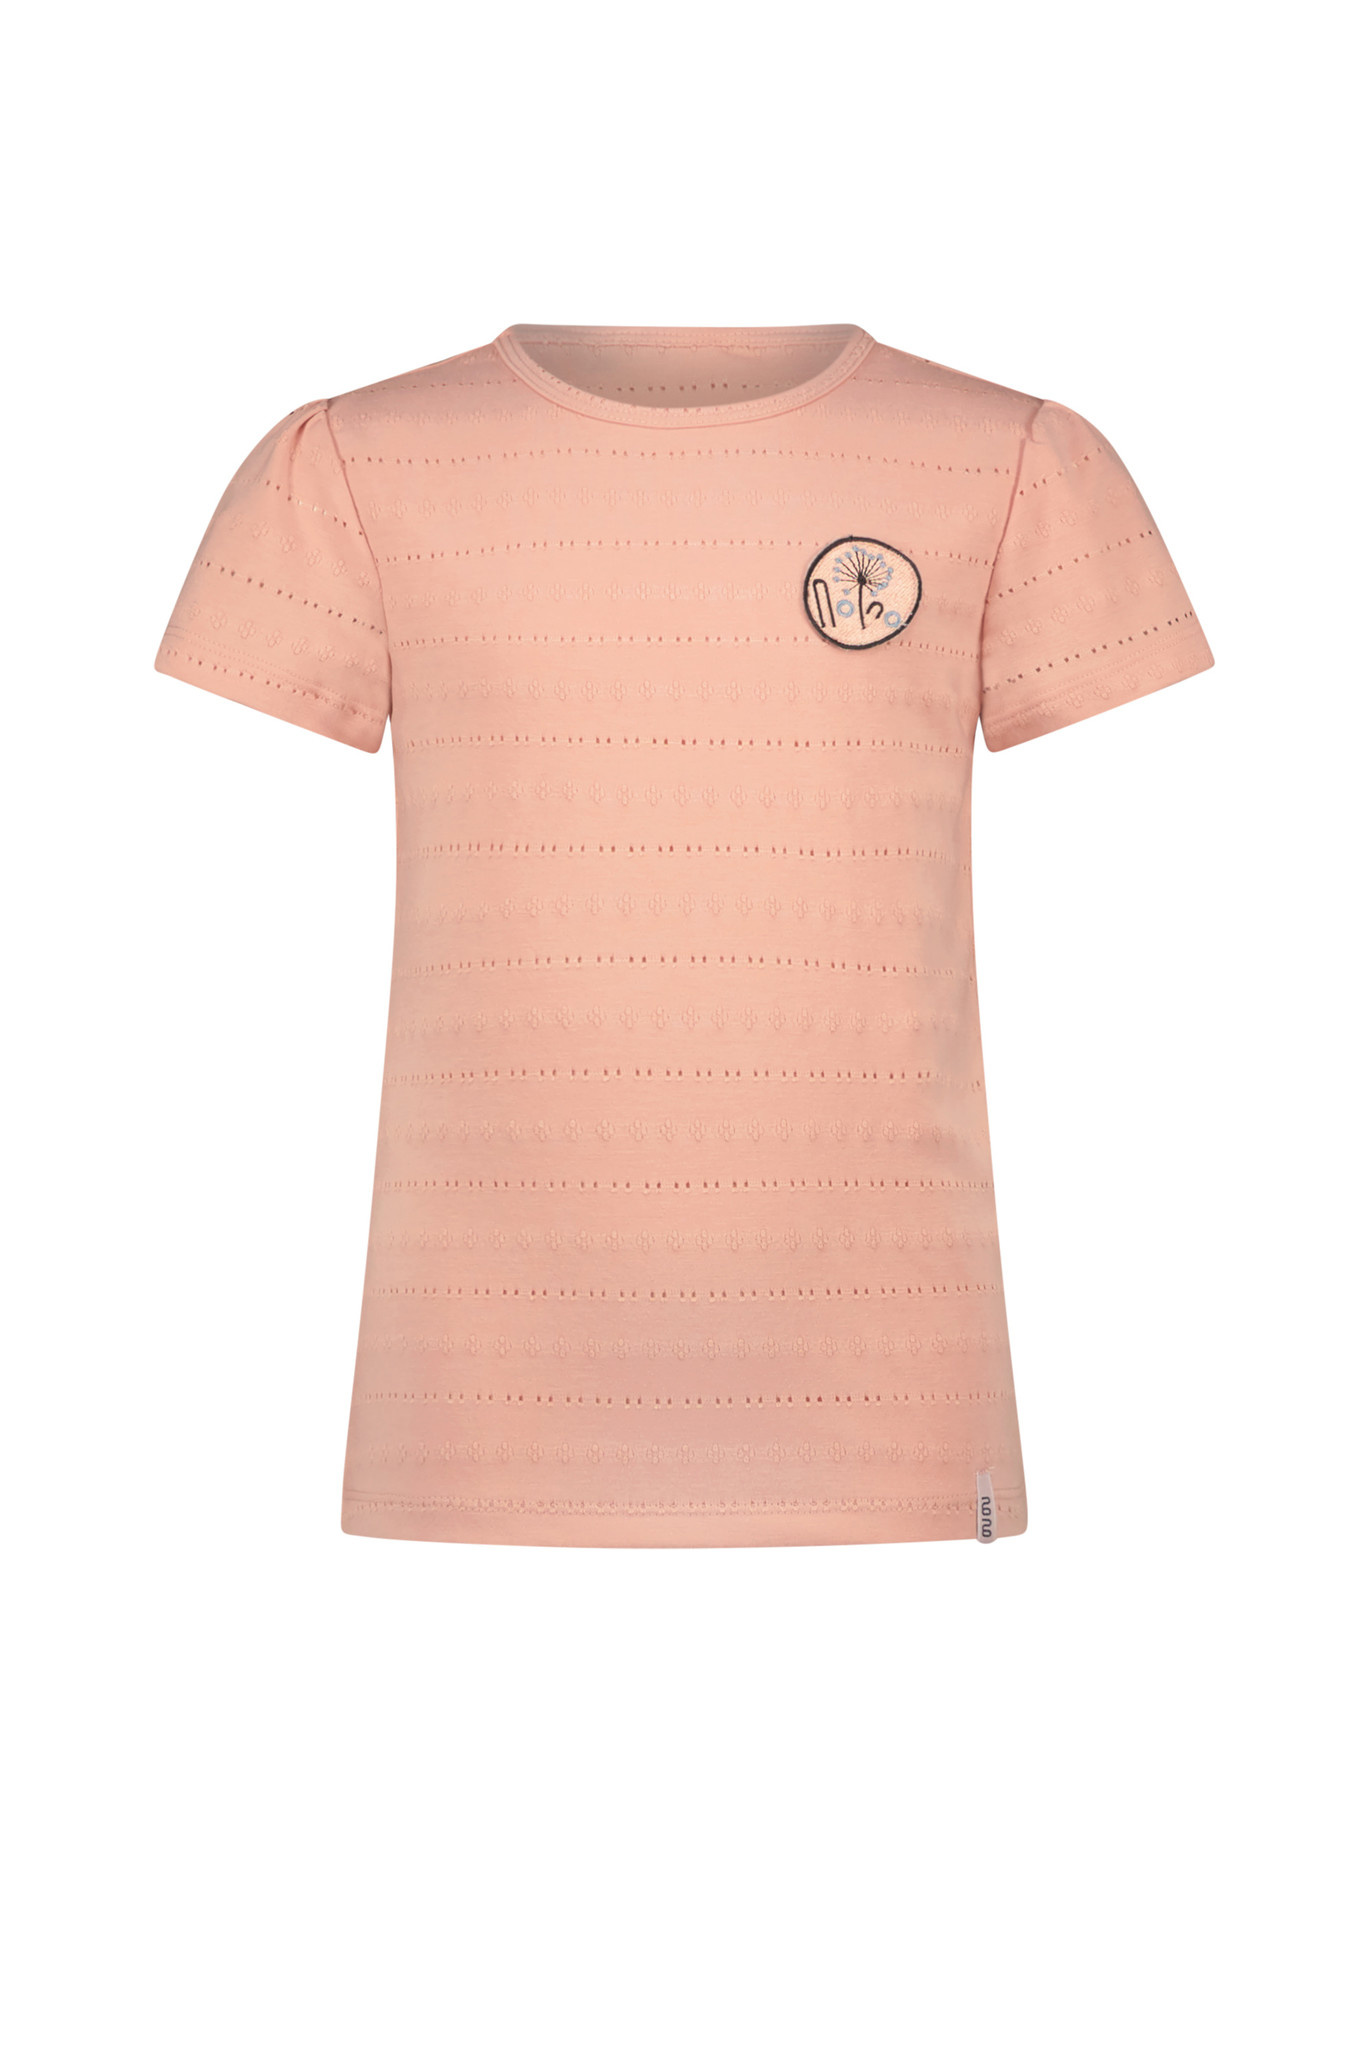 NONO - T-Shirt - Rosy Ginger - Maat 122-128